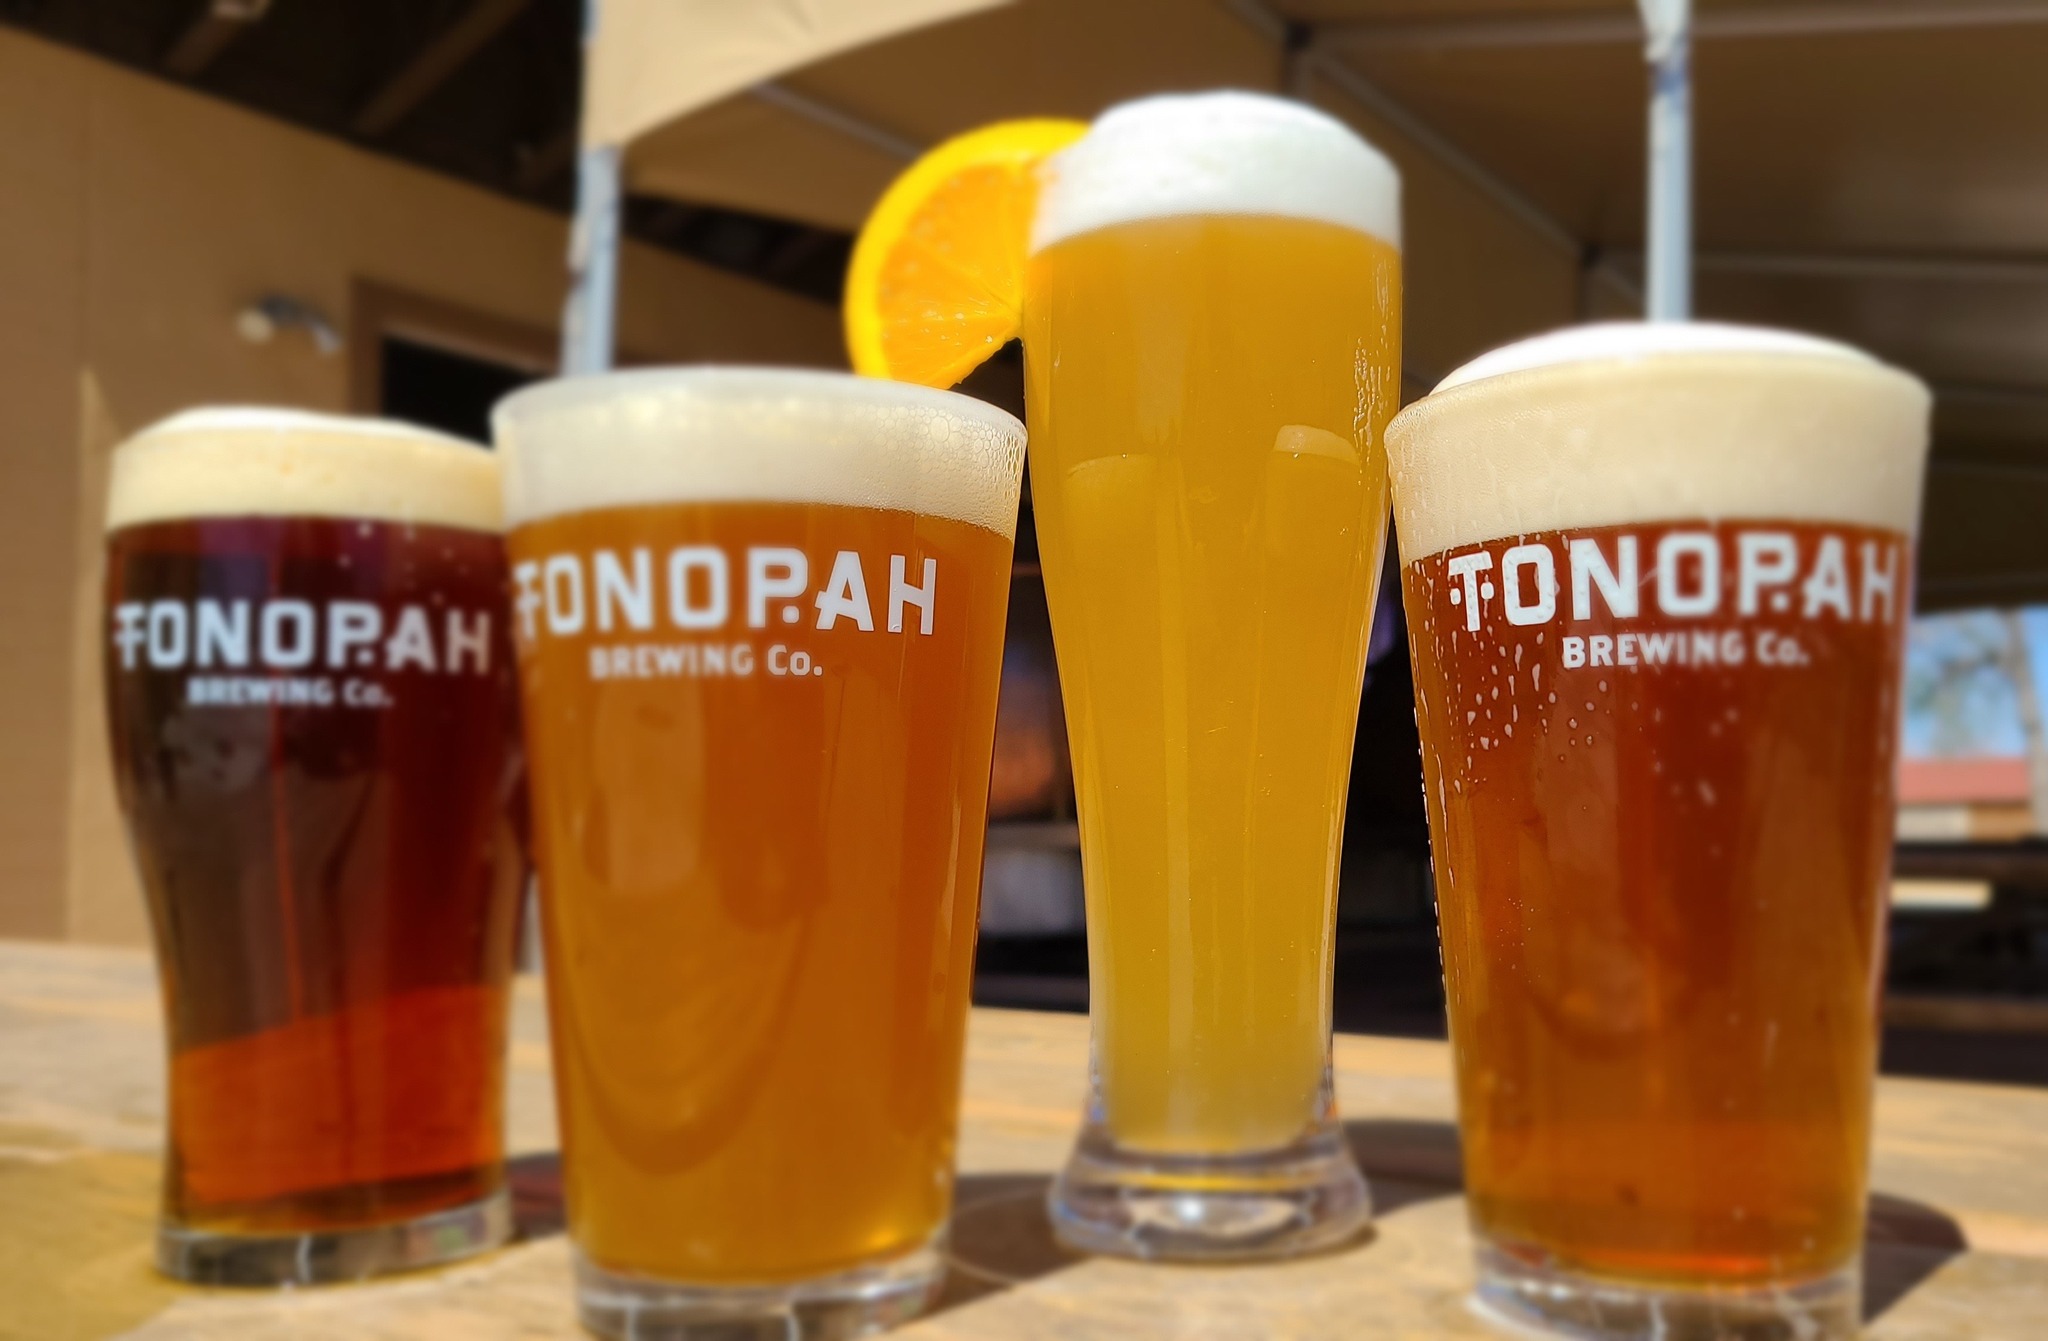 Tonopah Brewing Company